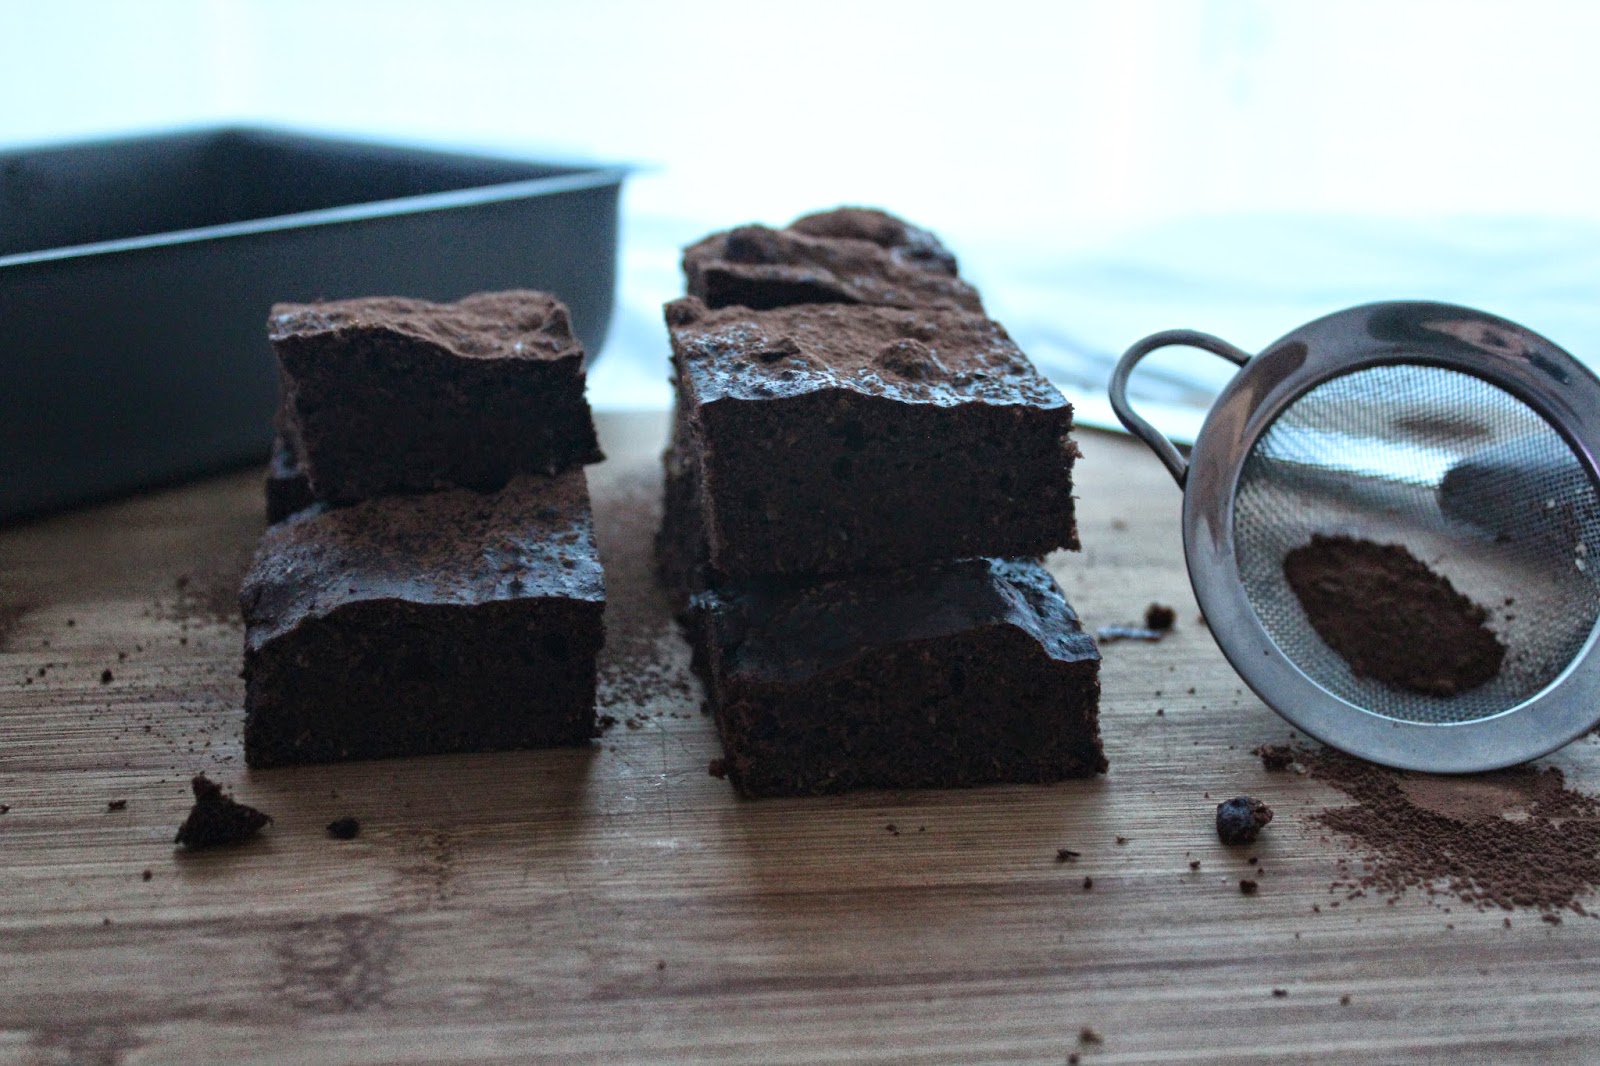 Dia 1 na Cozinha ou uma novidade em forma de Brownies / Day 1 in the kitchen or the novelty of Brownies